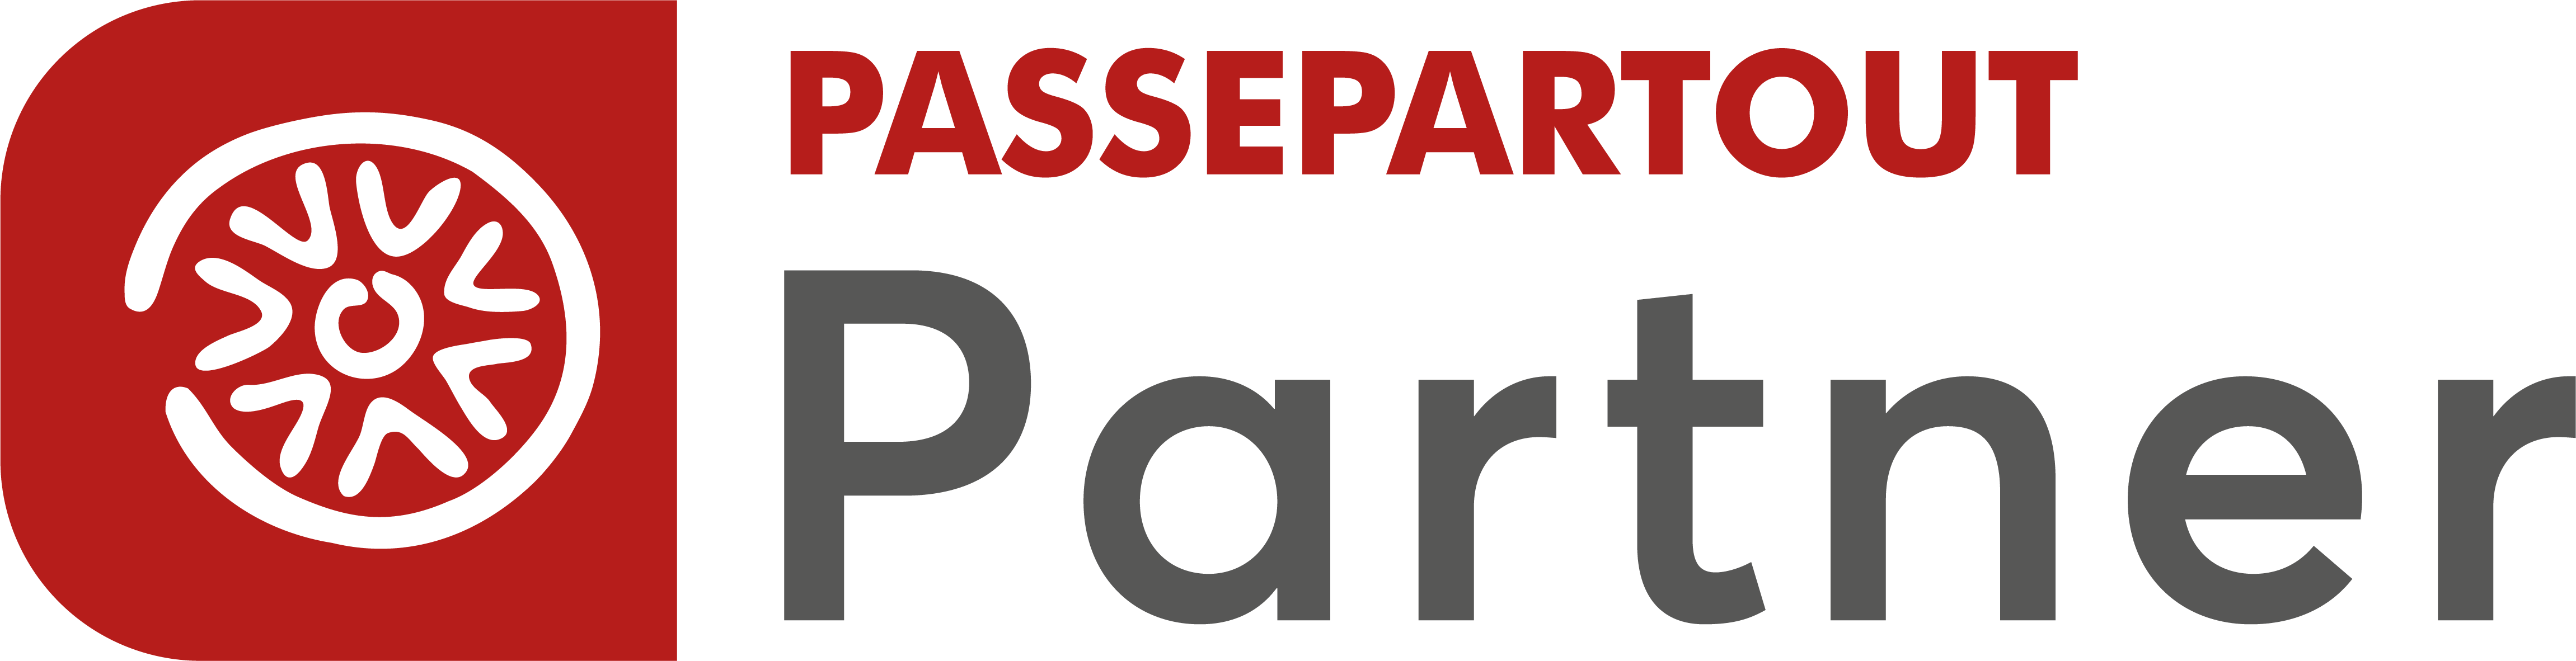 partner_passepartout